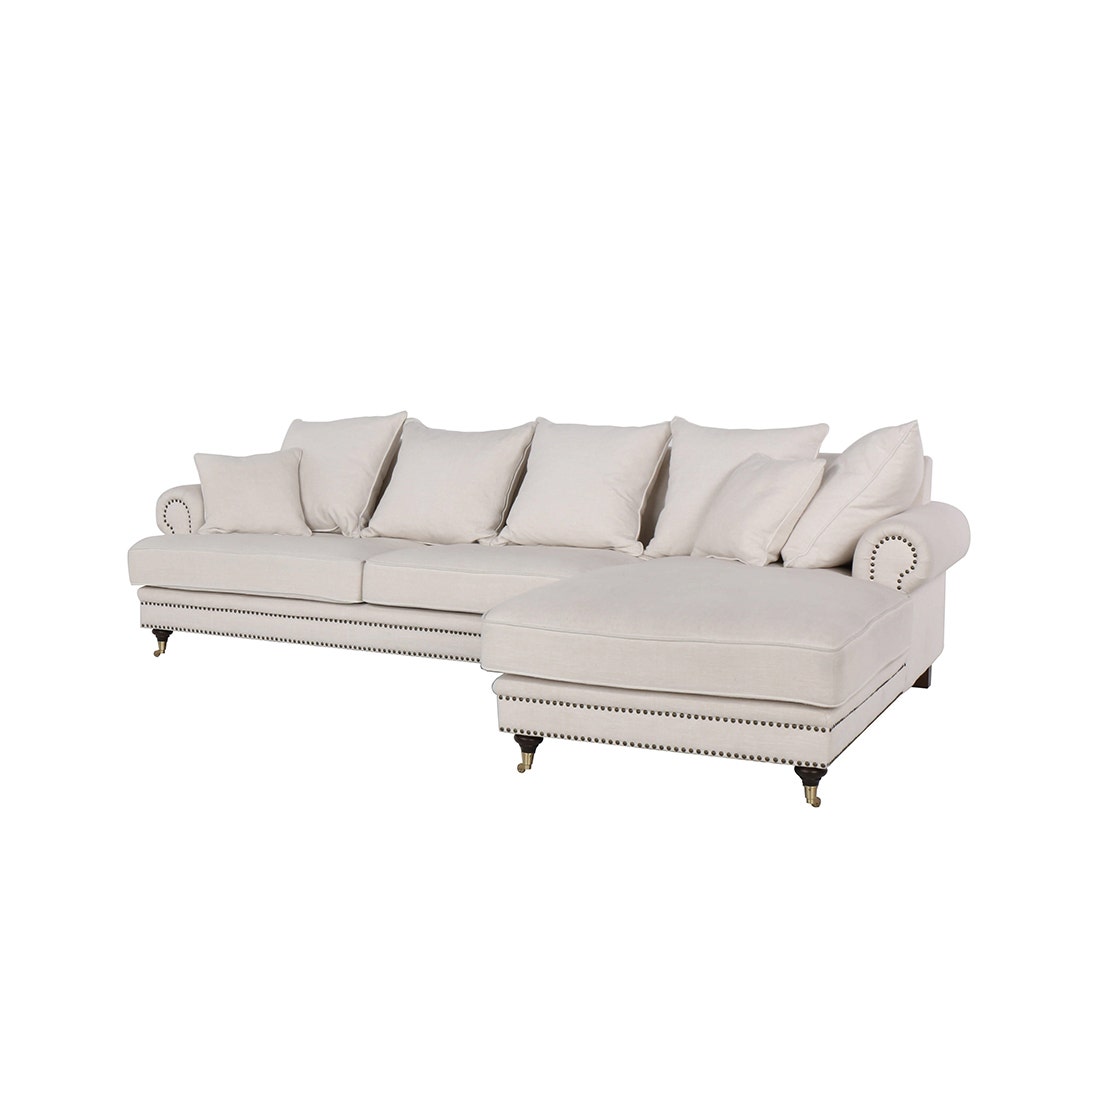 19078048-troden-furniture-sofa-recliner-corner-sofas-31